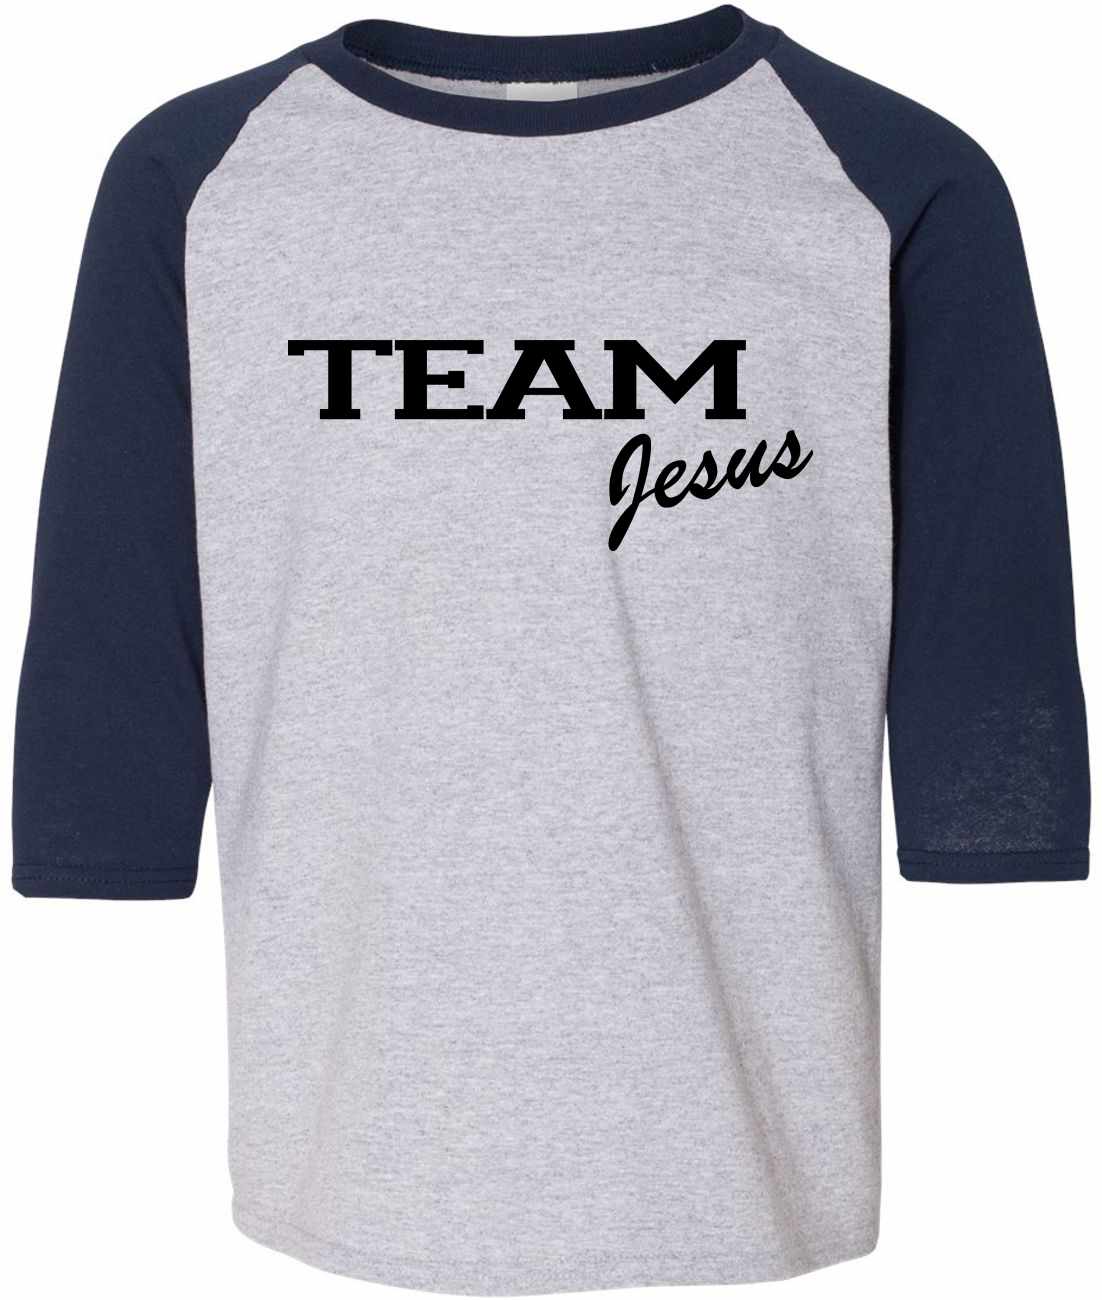 TEAM Jesus on Youth Baseball Shirt (#225-212)